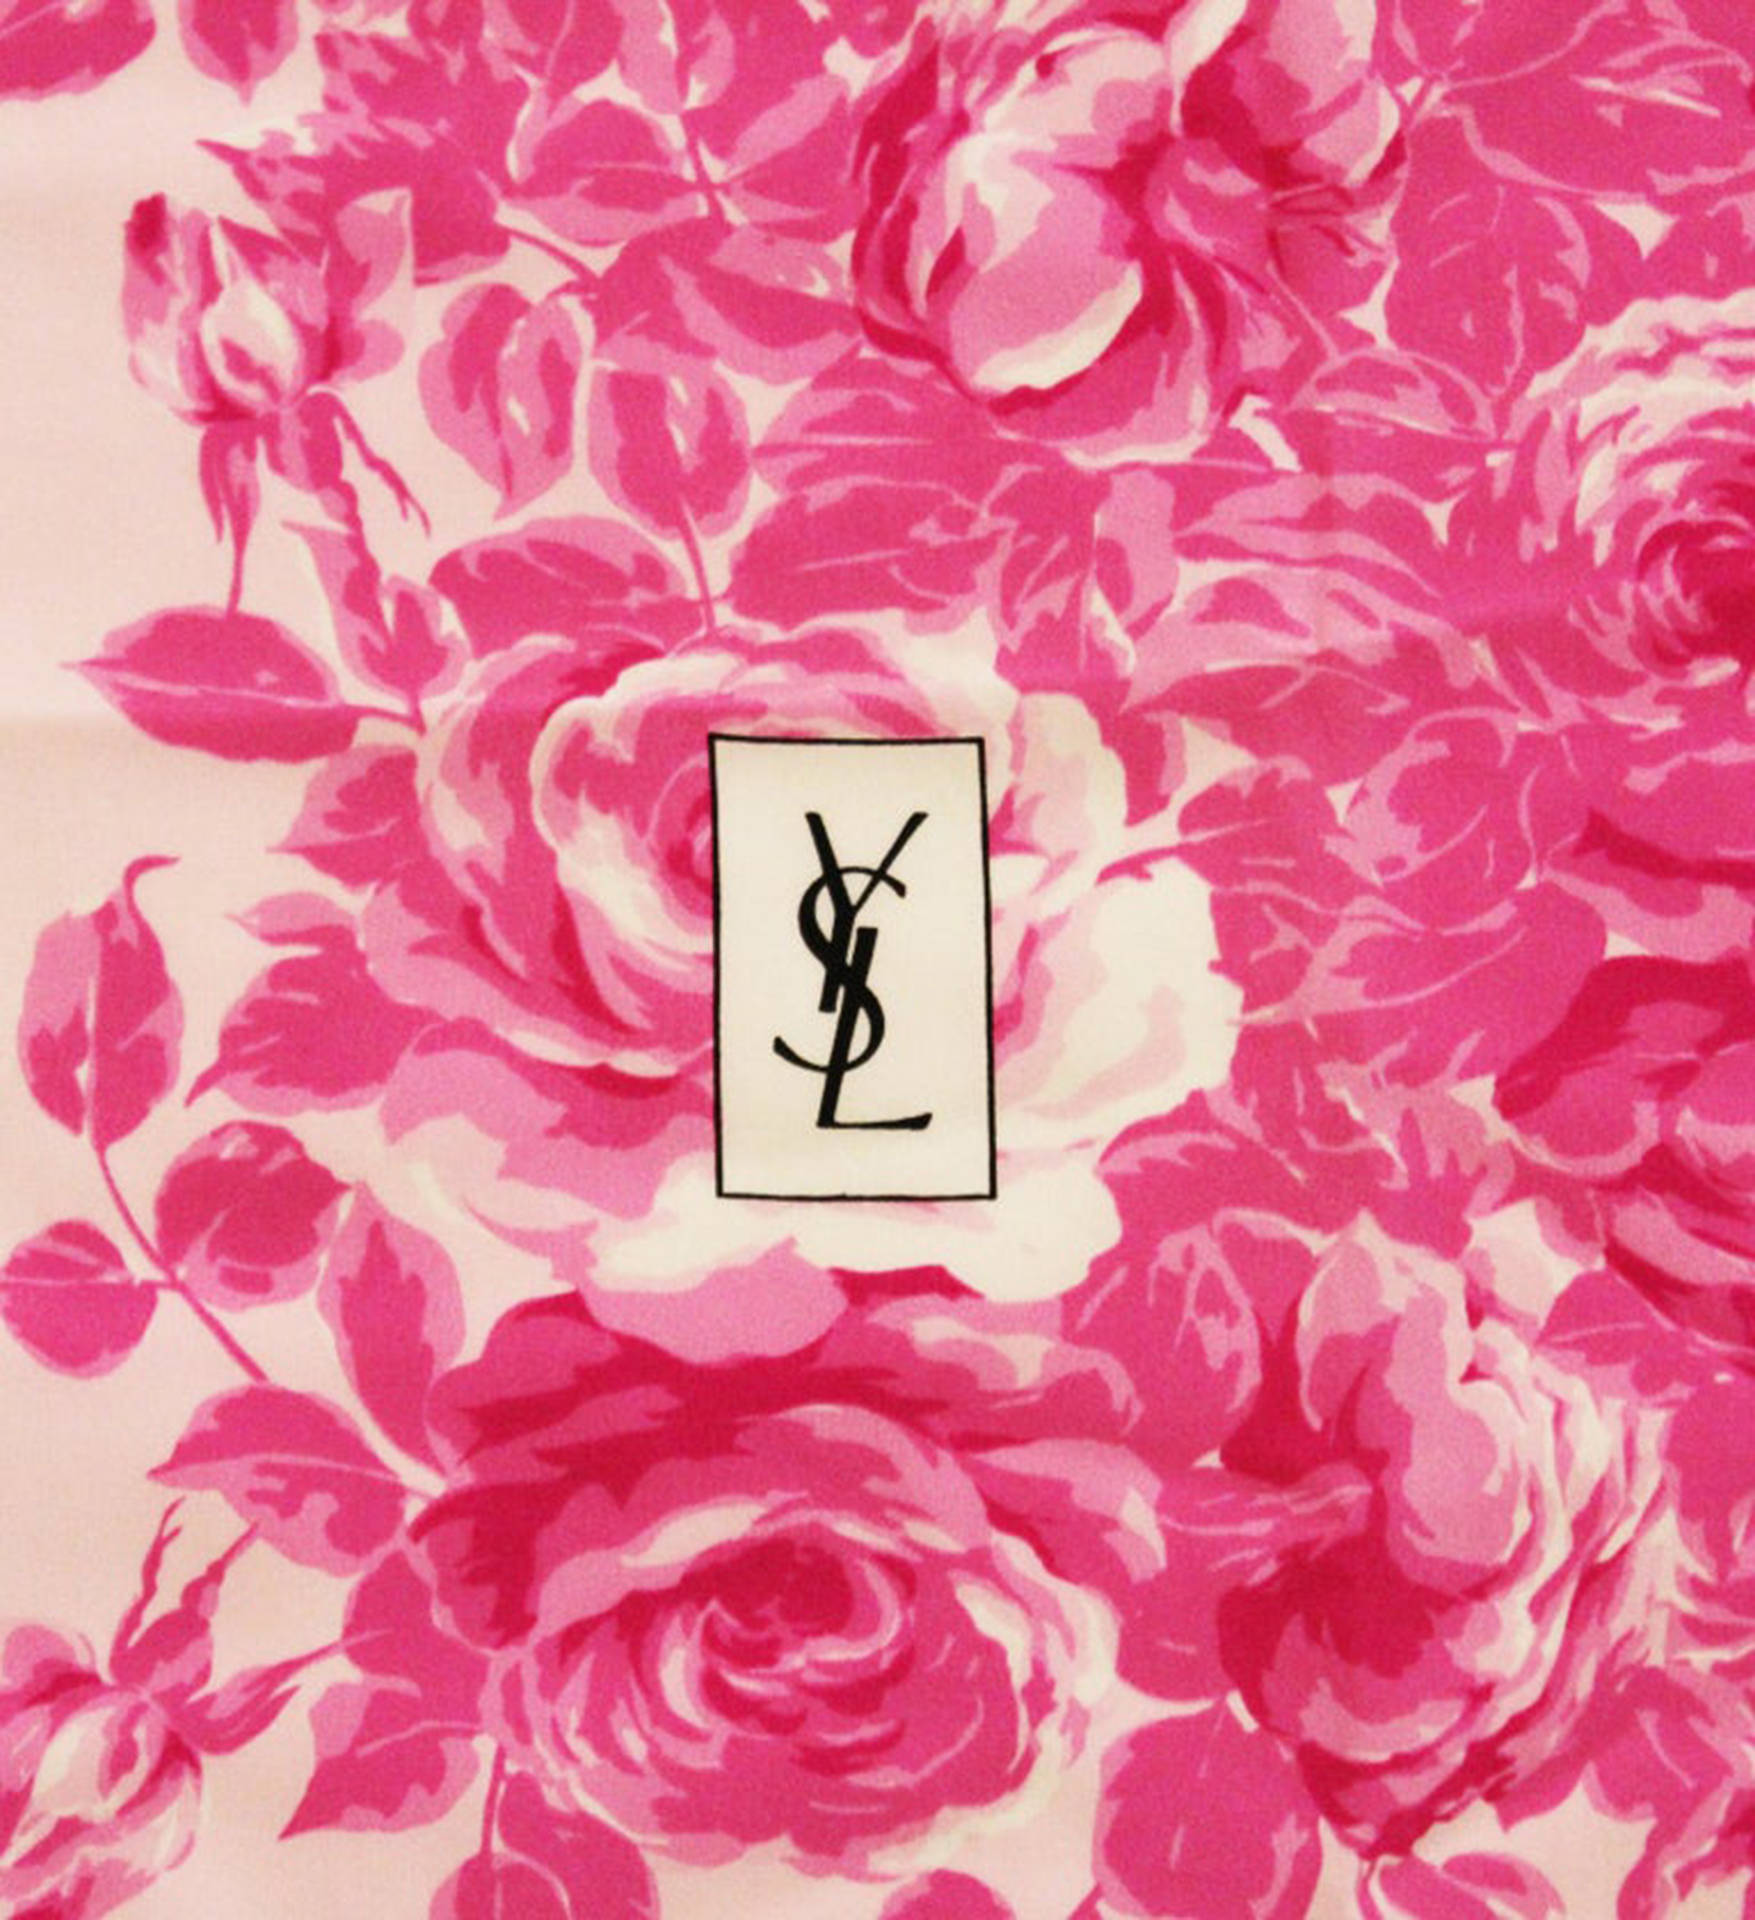 Ysl Logo Rose Scarf Background